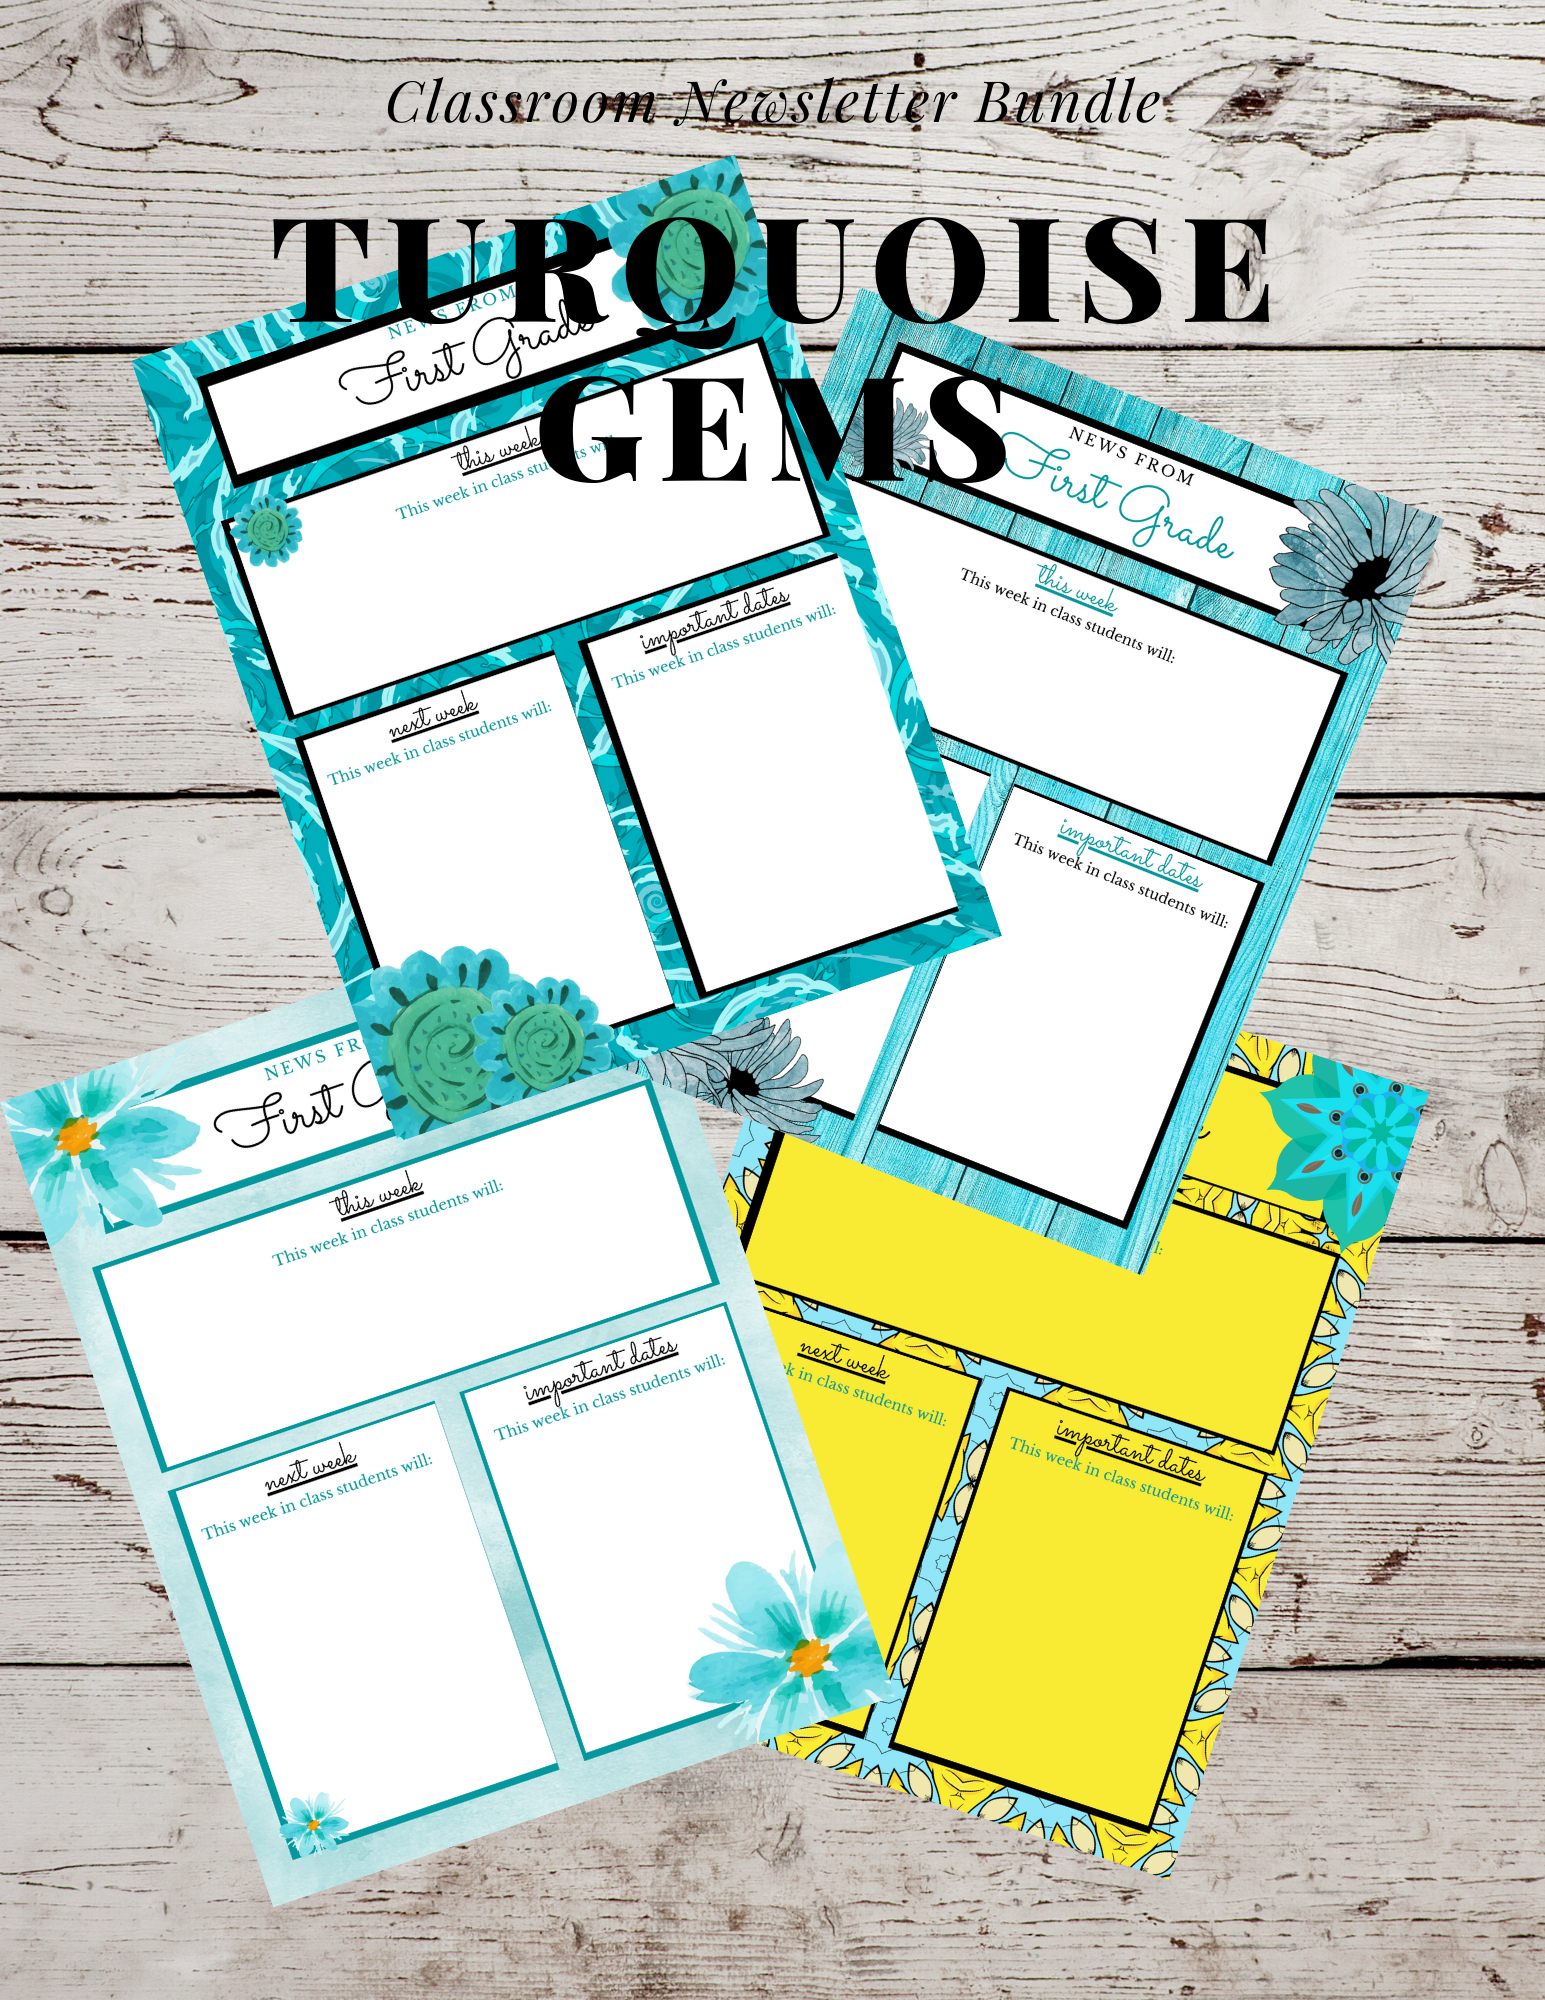 Turquoise Gems Classroom Newsletter Bundle